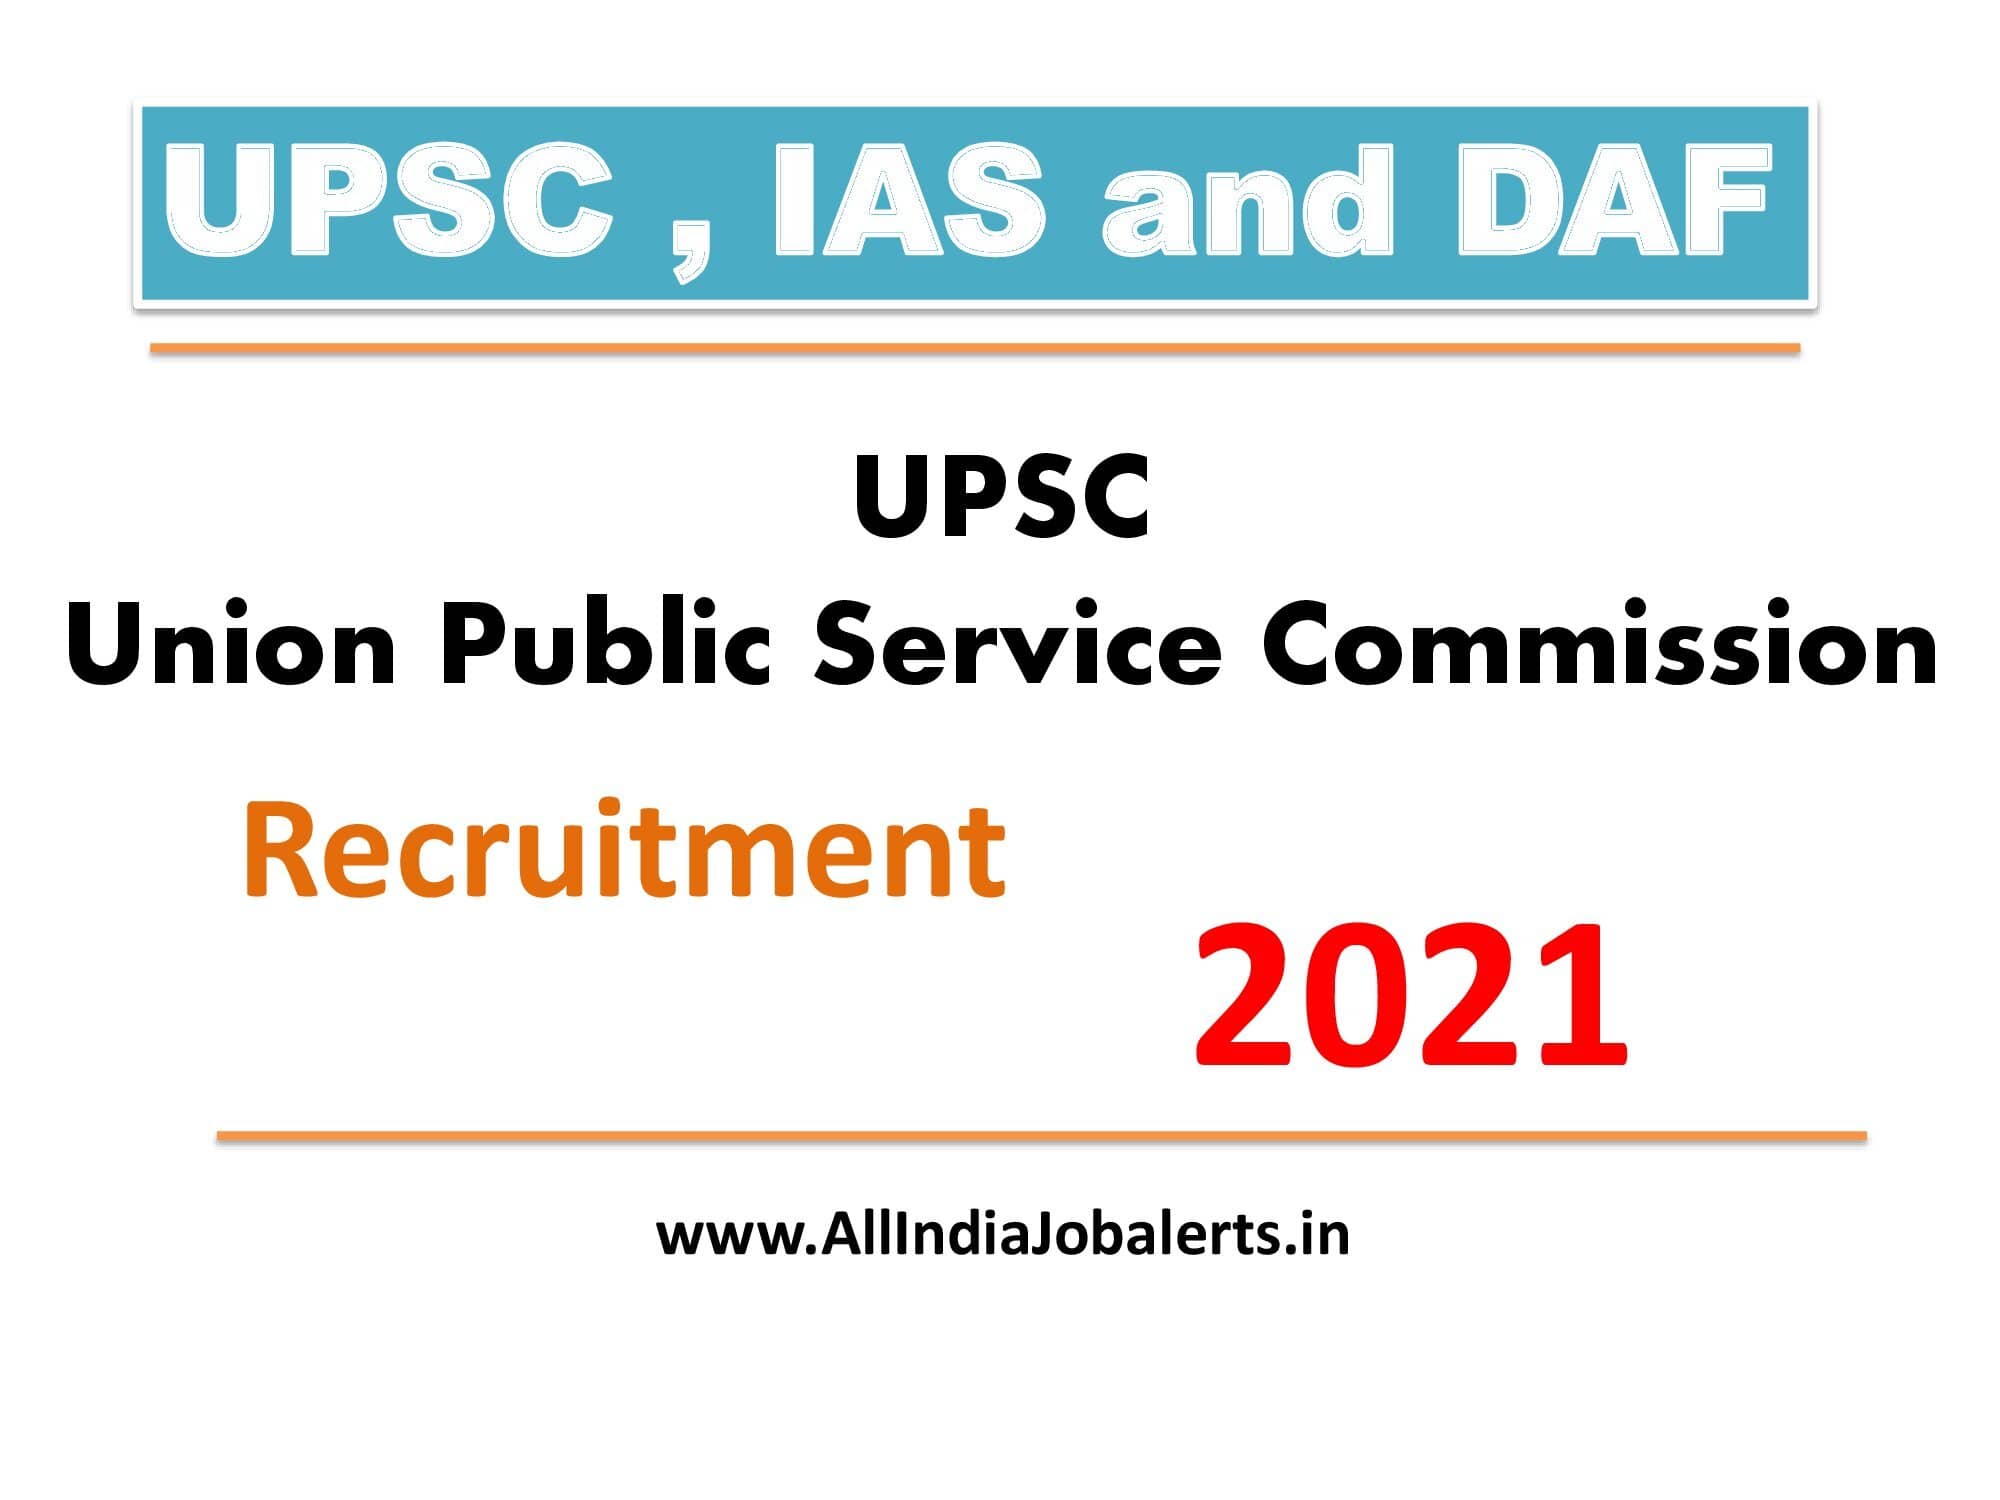 UPSC IAS and DAF Service Recruitment 2021